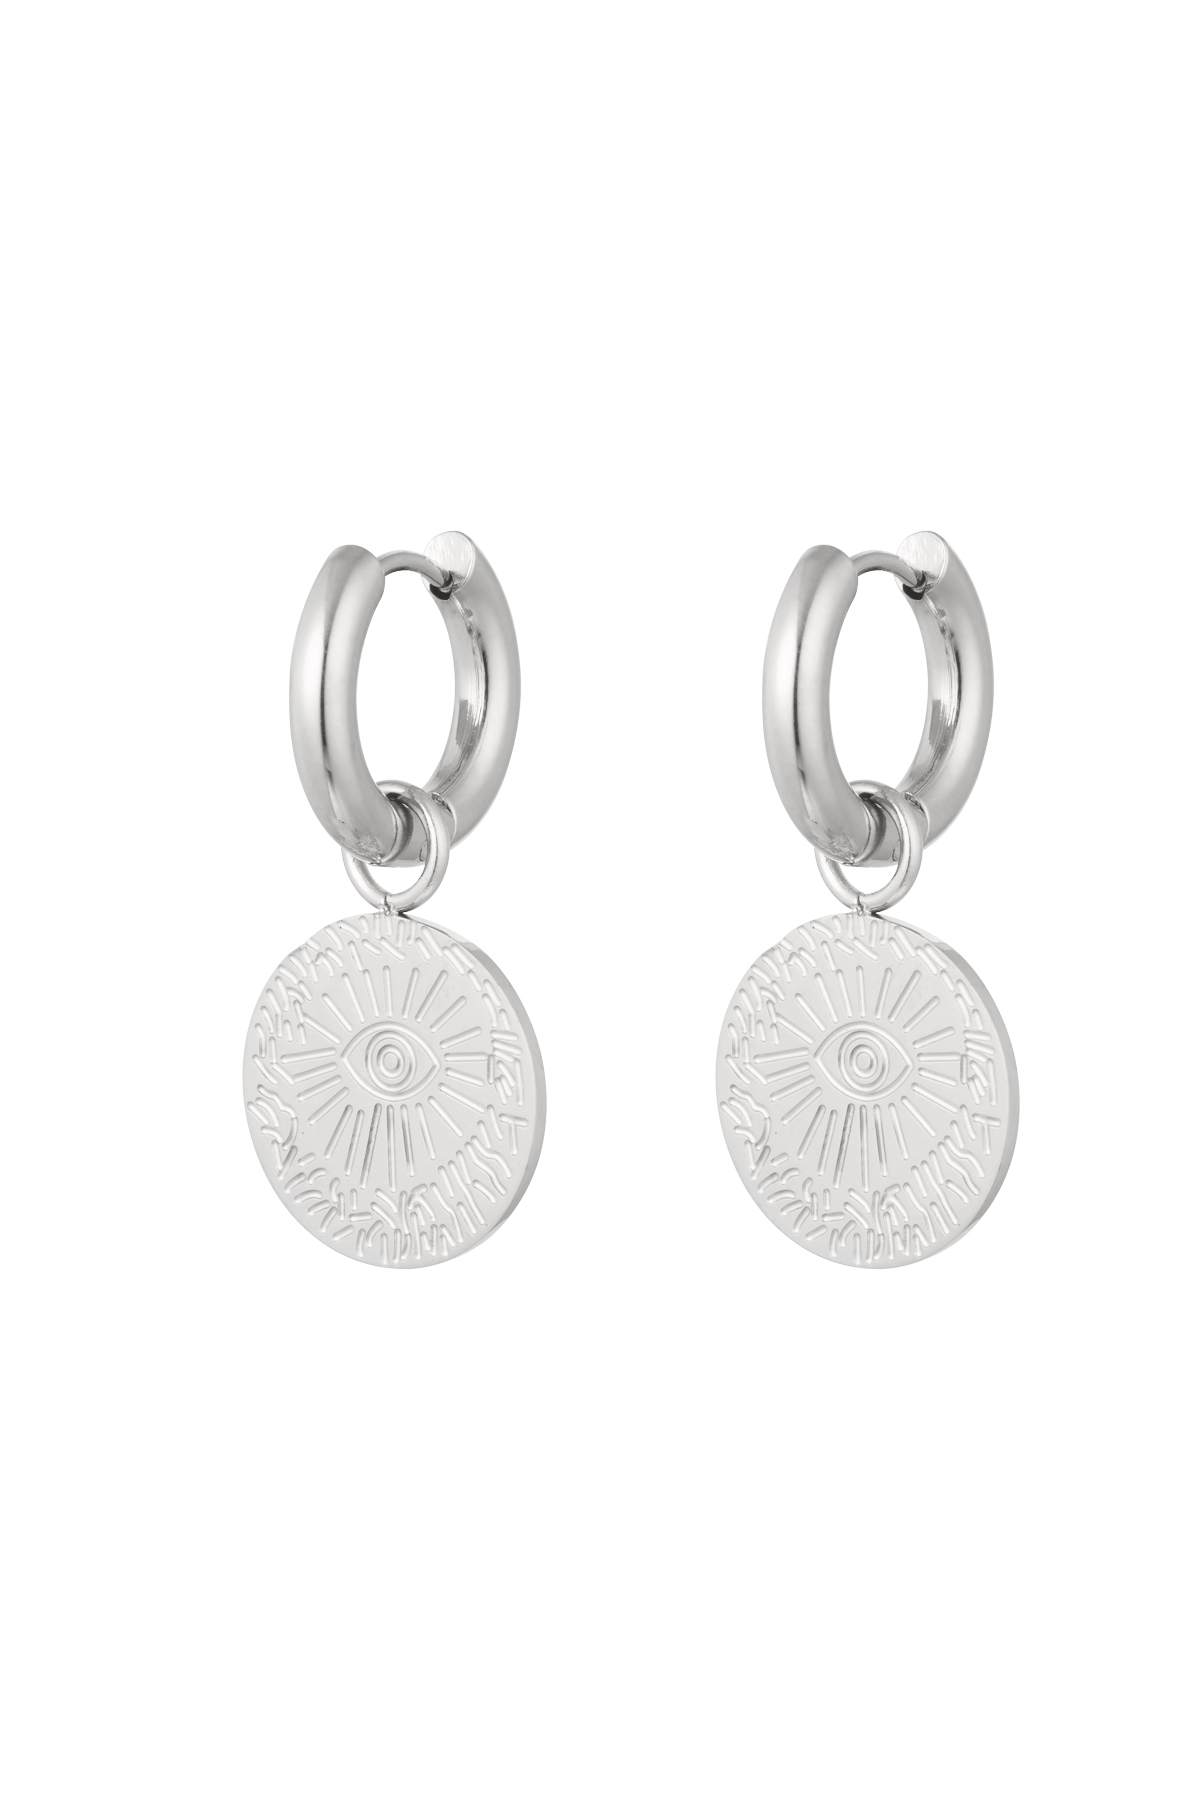 Earrings eye coin - silver Stainless Steel 